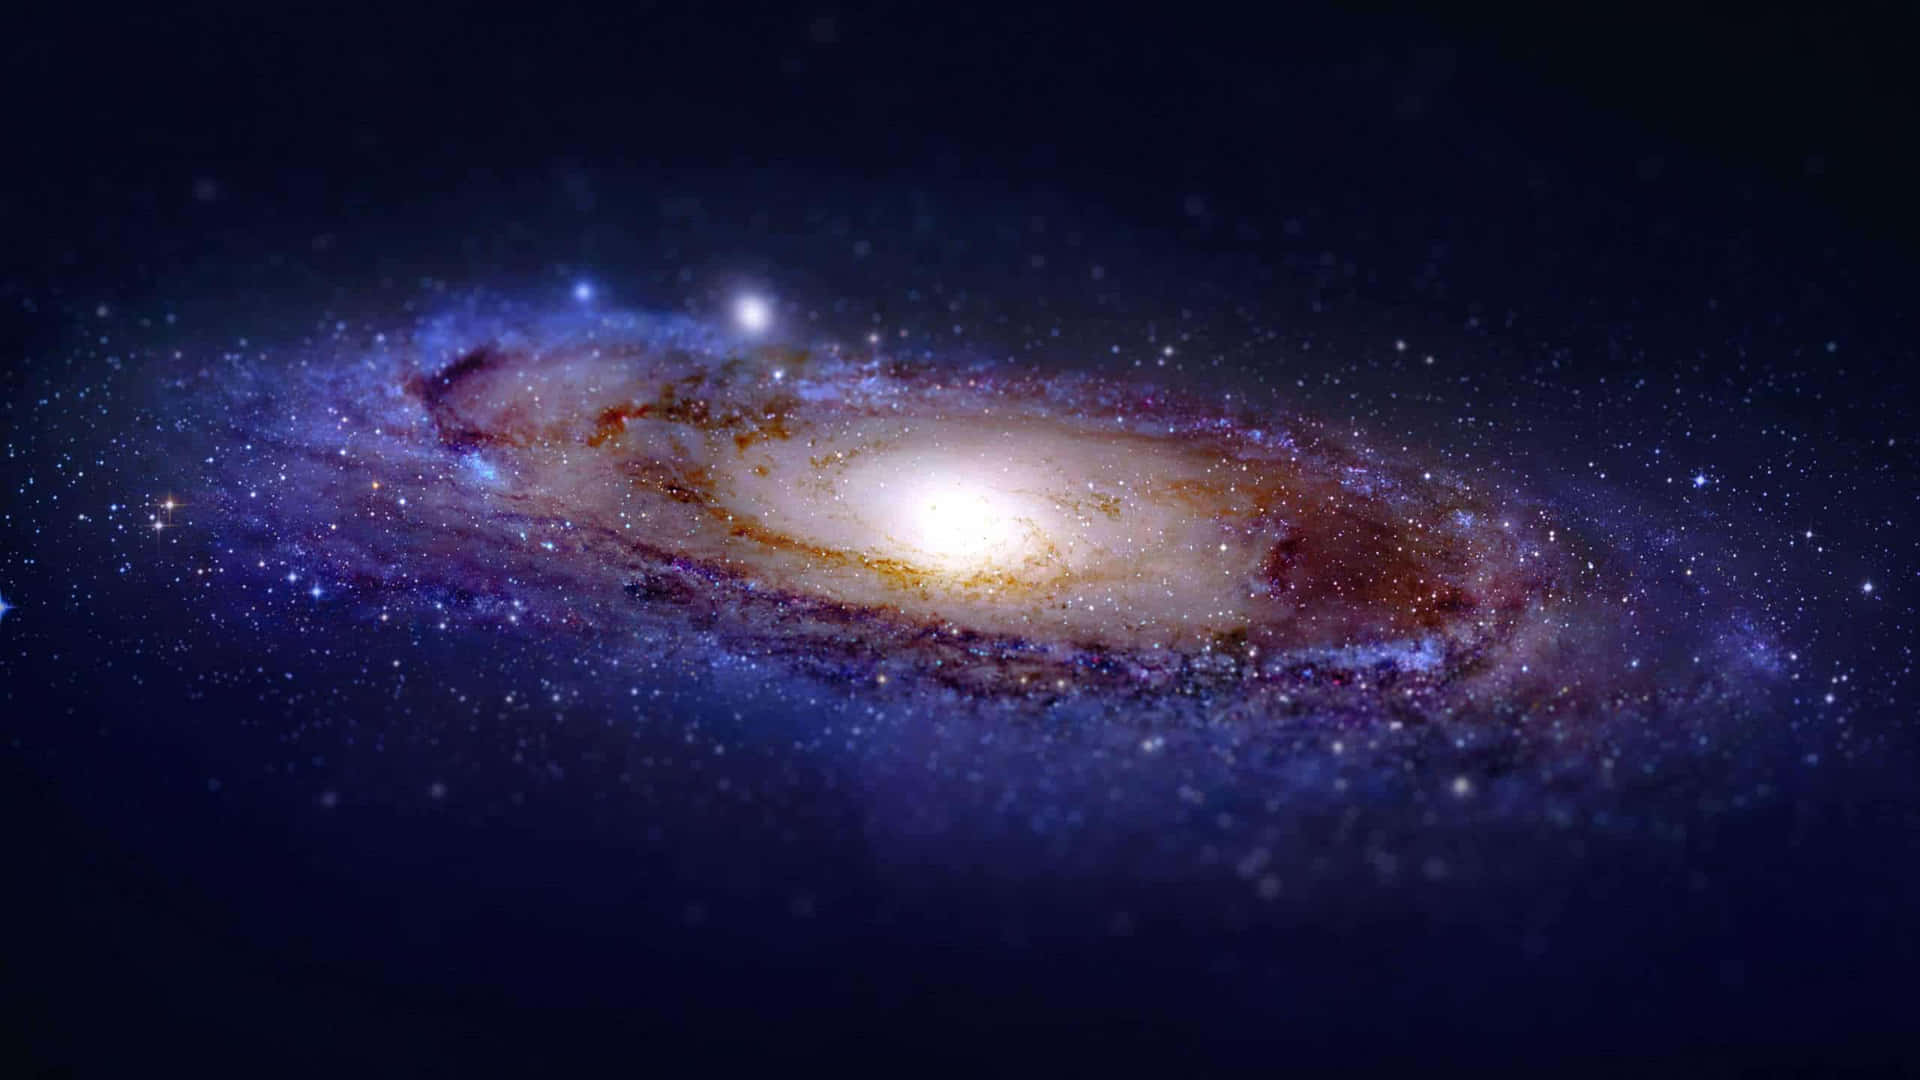 1440prymd Cool Andromeda Galaxen Wallpaper